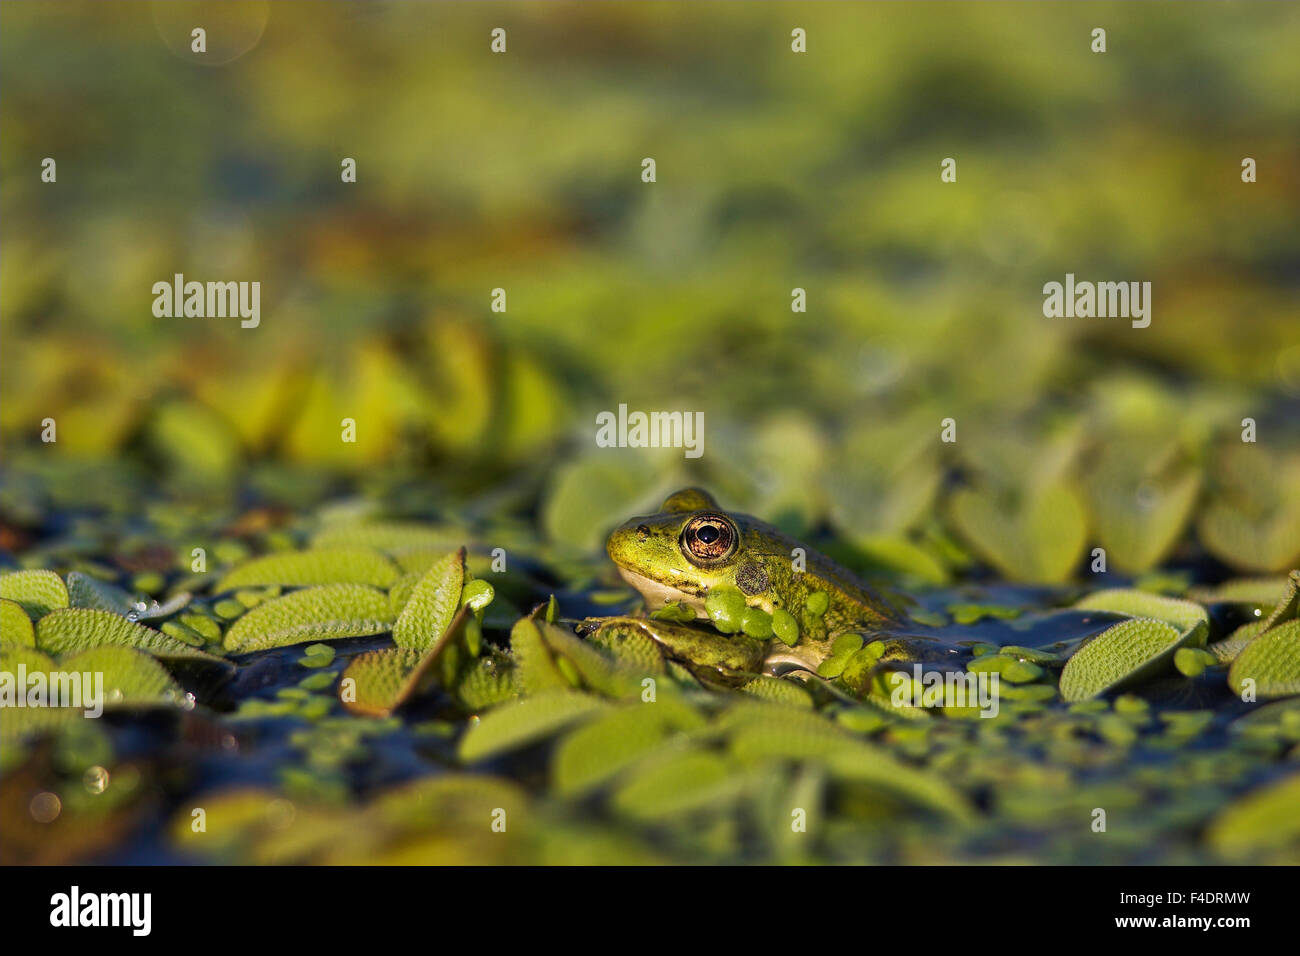 Edible Frog (Rana esculenta or Pelophylax kl. esculentus) in the Danube Delta between leaves of water spangles (salvinia natans) swimming in water. Europe, Eastern Europe, Romania, Danube Delta. Stock Photo